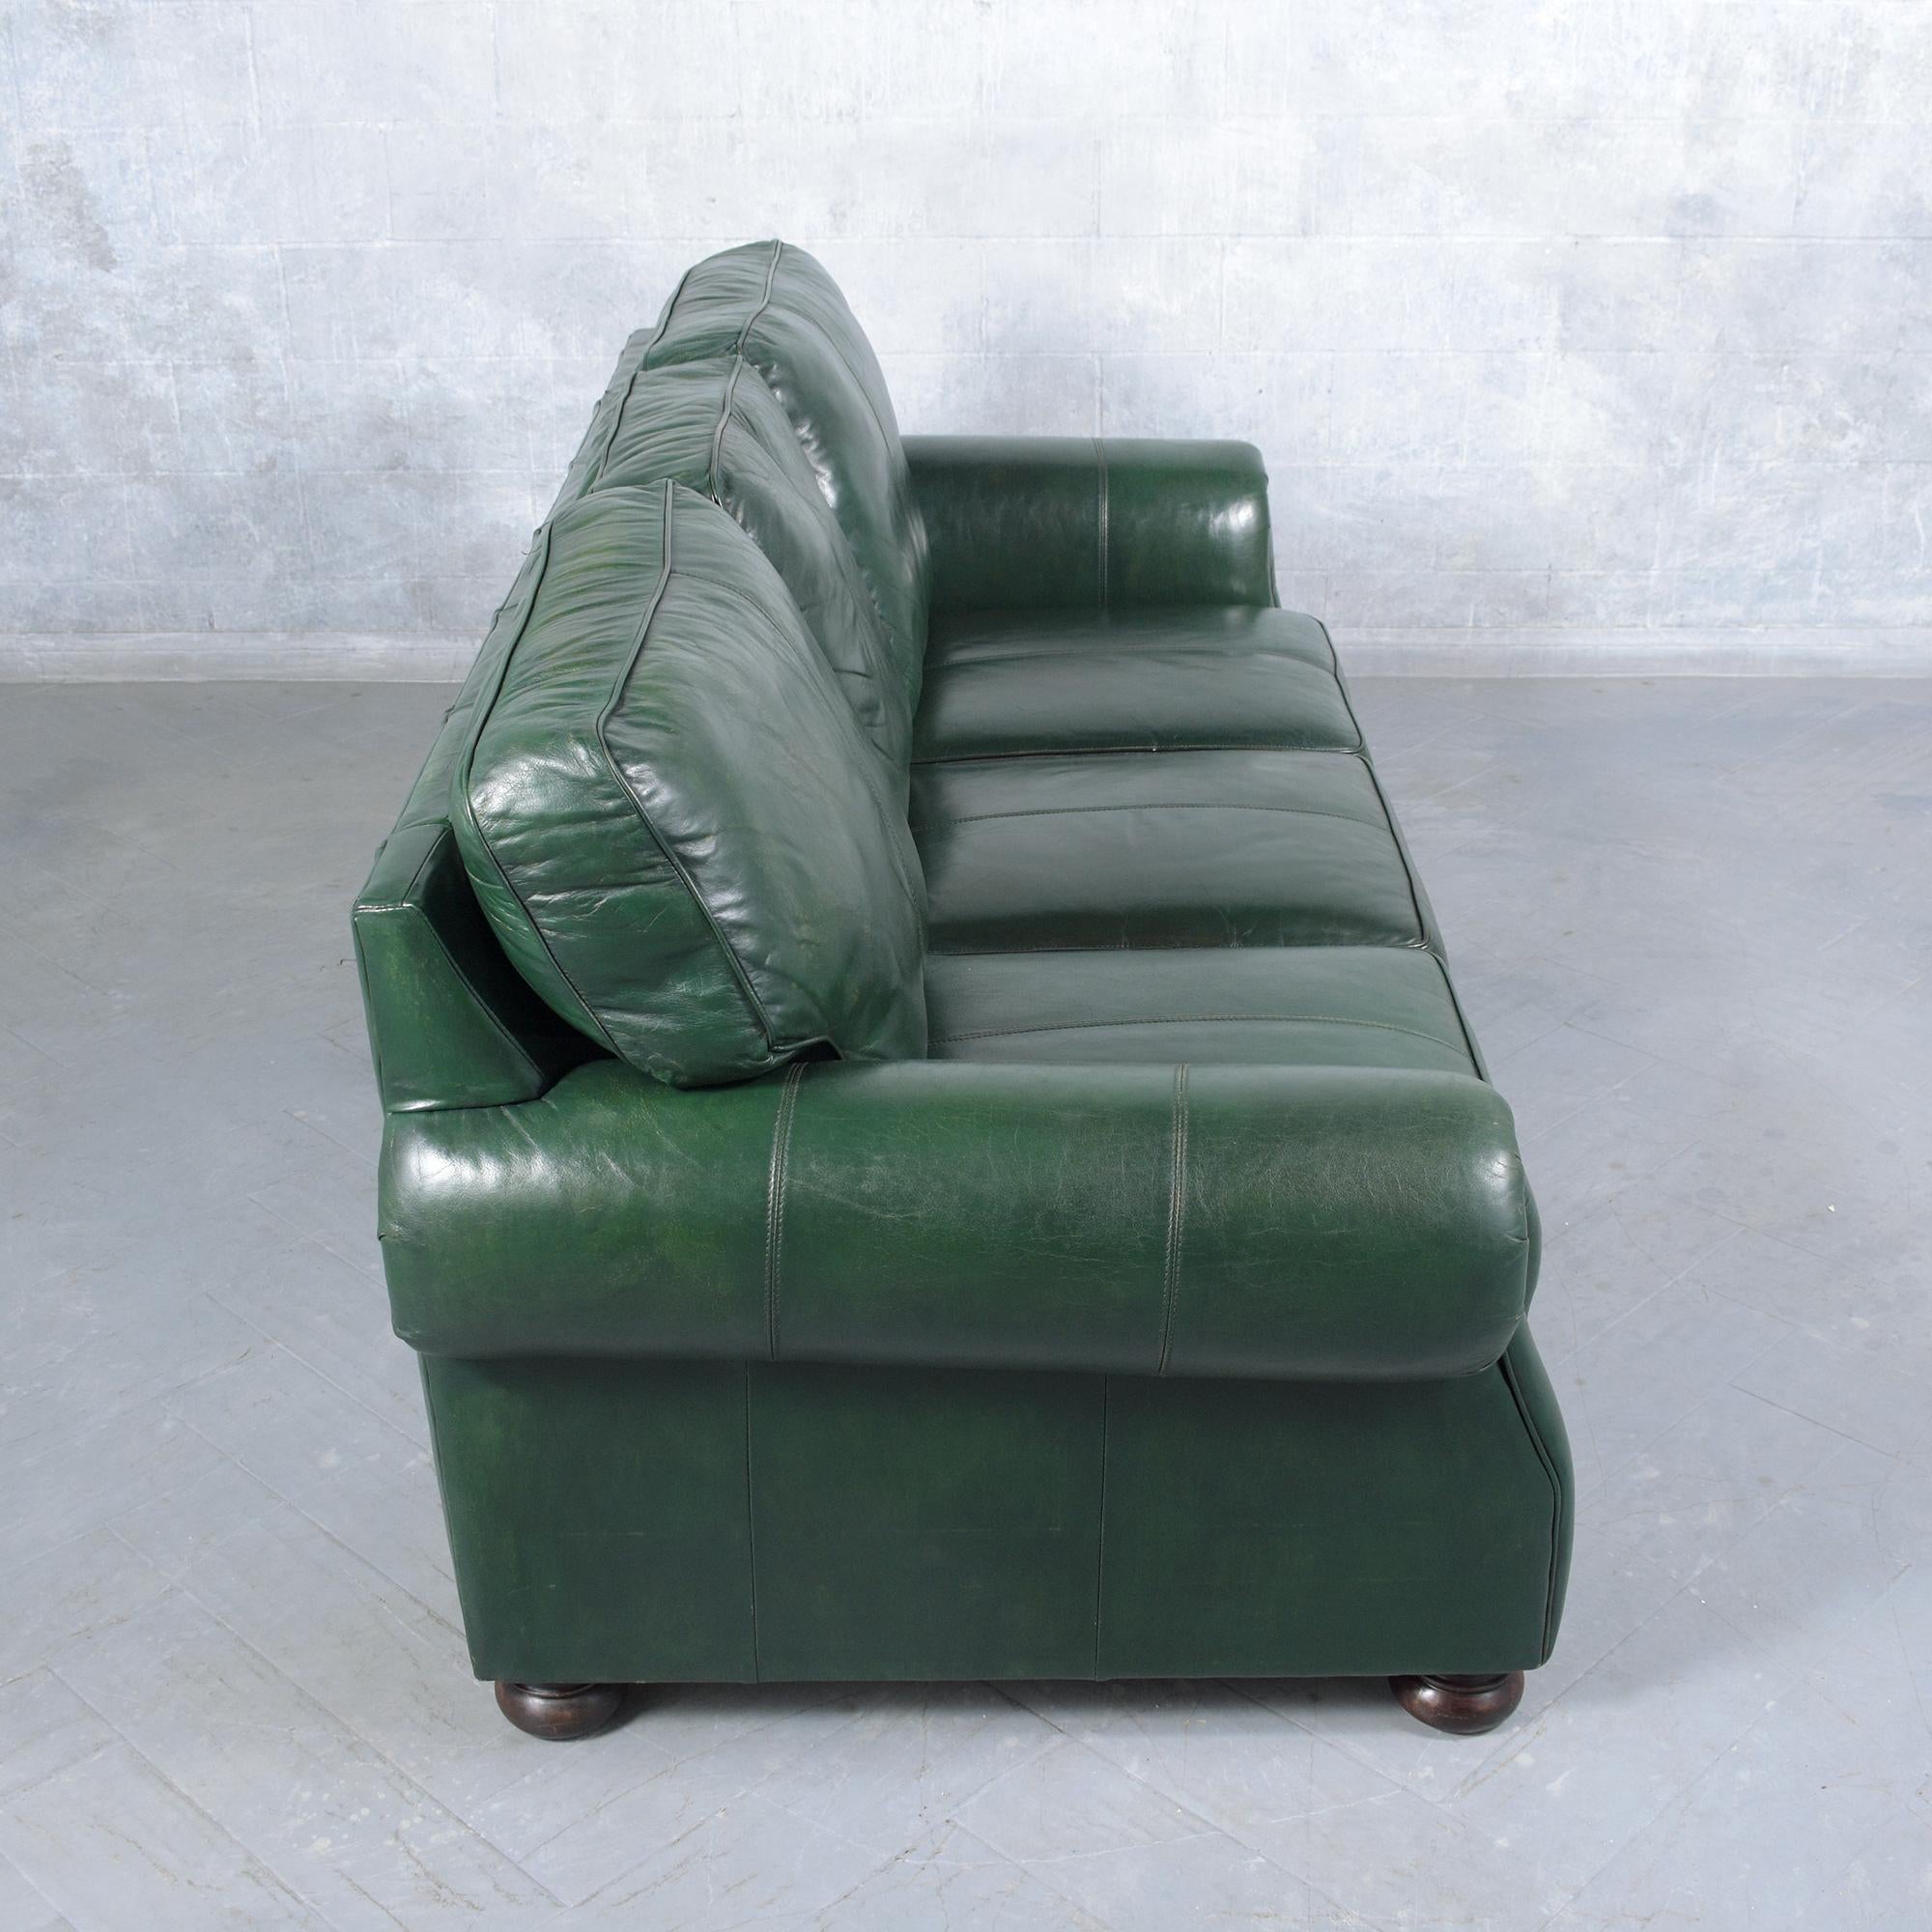 Elegant 1980s Restored Leather Sofa: A Blend of Vintage and Modern For Sale 5